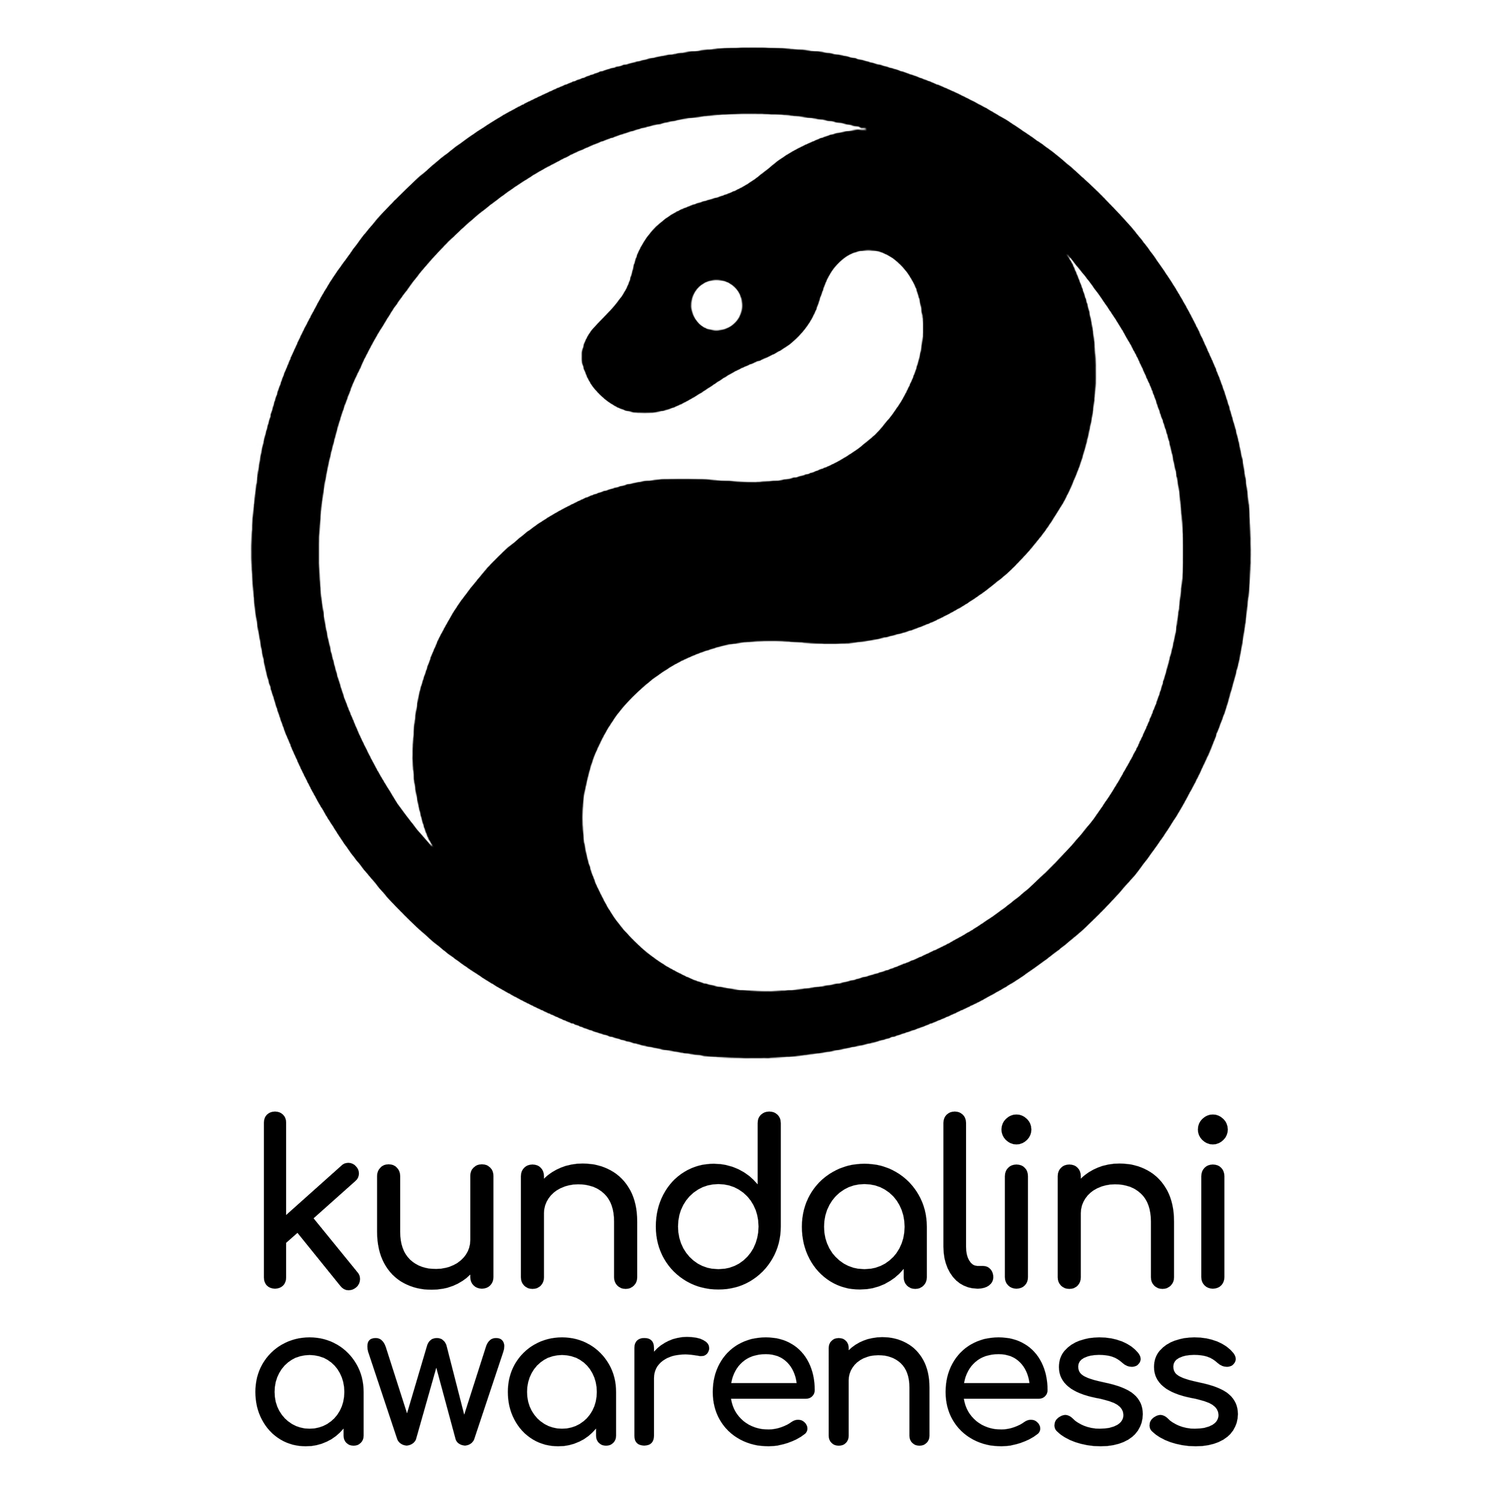 Kundalini Shakti Awakening Awareness - Directory of Professionals and Peer Support